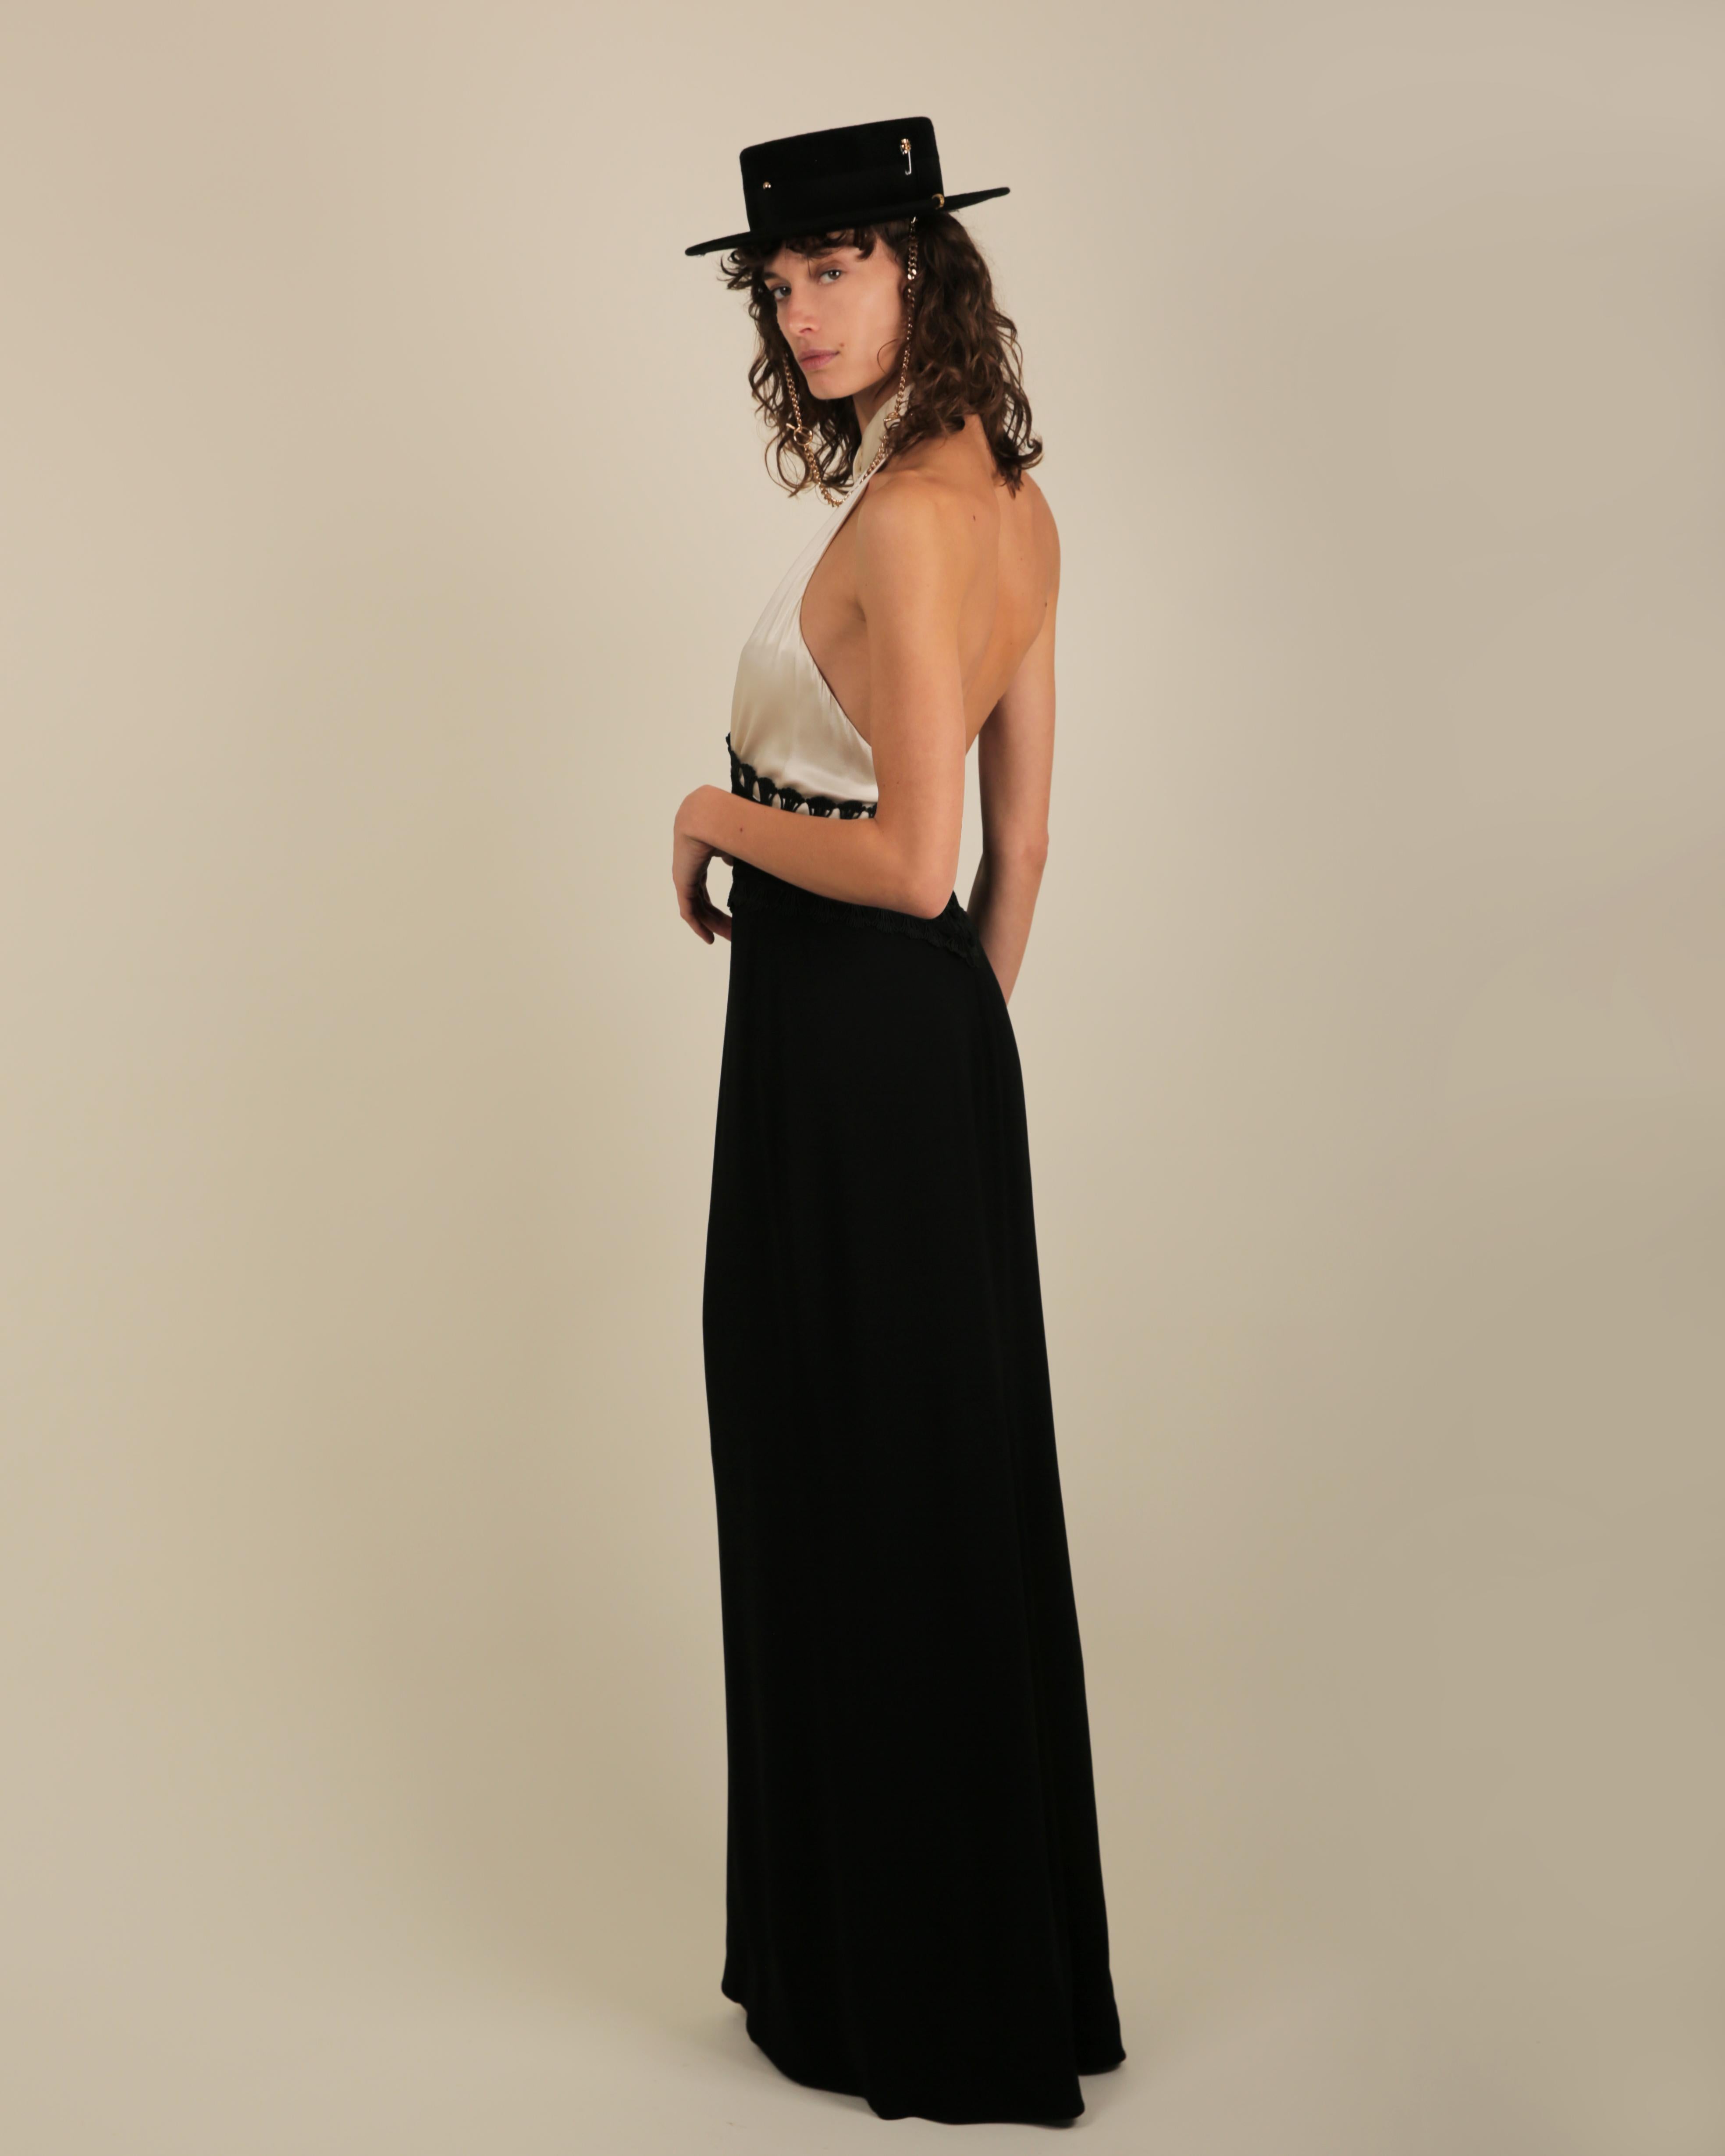 Ralph Lauren SS 2013 black white sleeveless halter backless button up dress gown For Sale 5